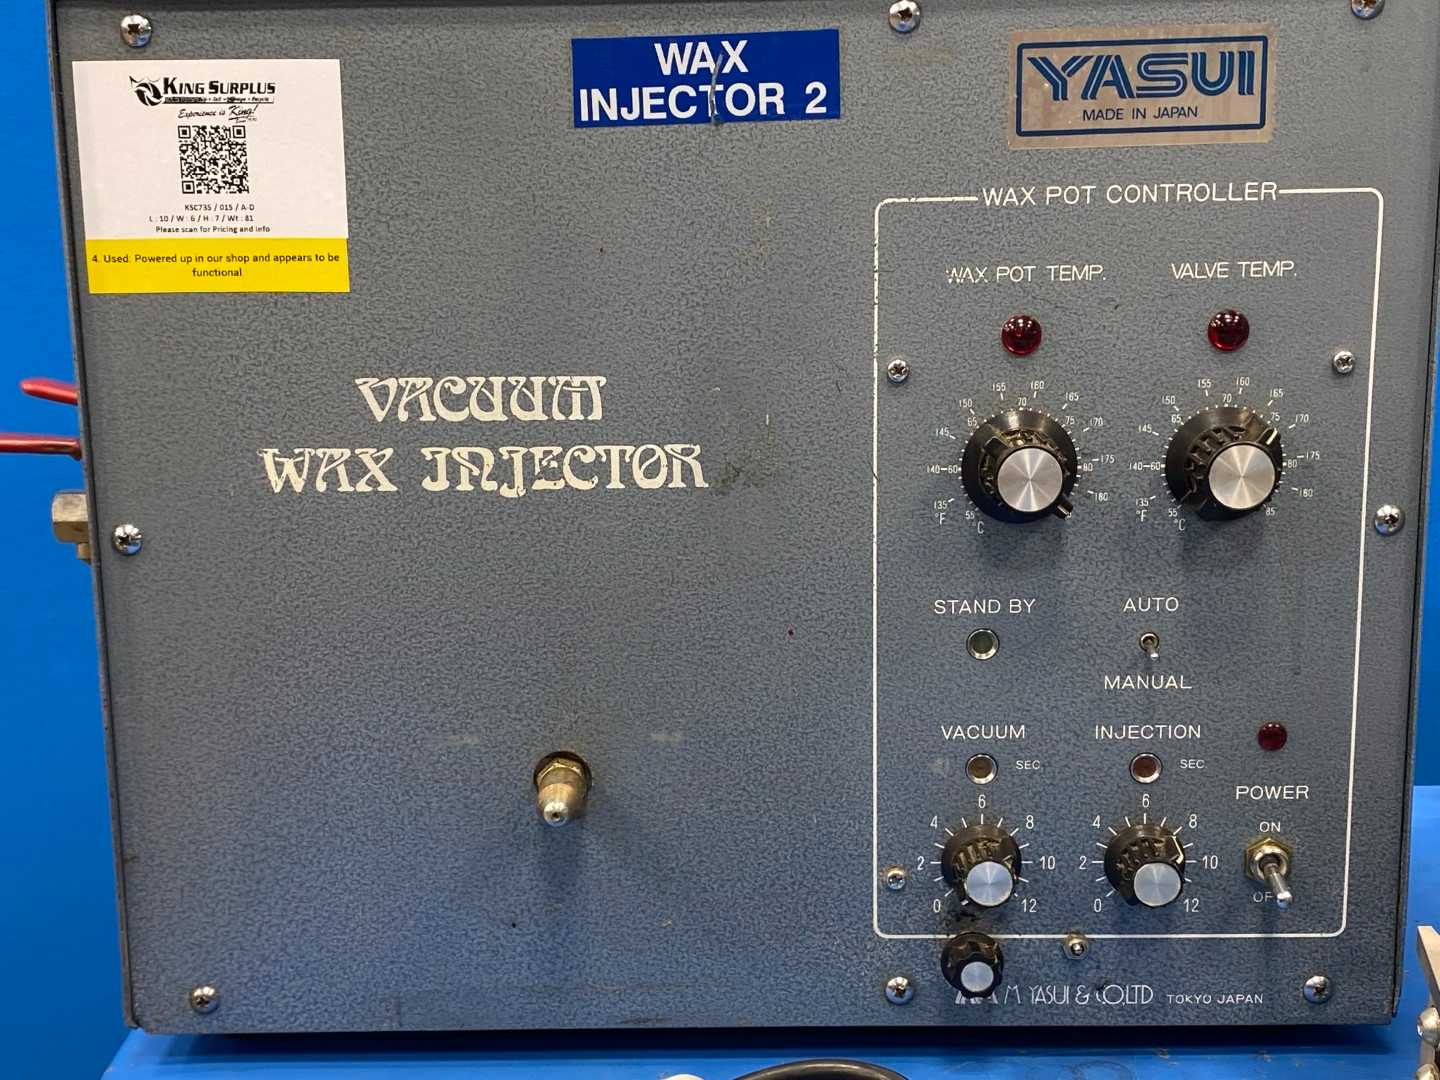 Yasui Wax Injector